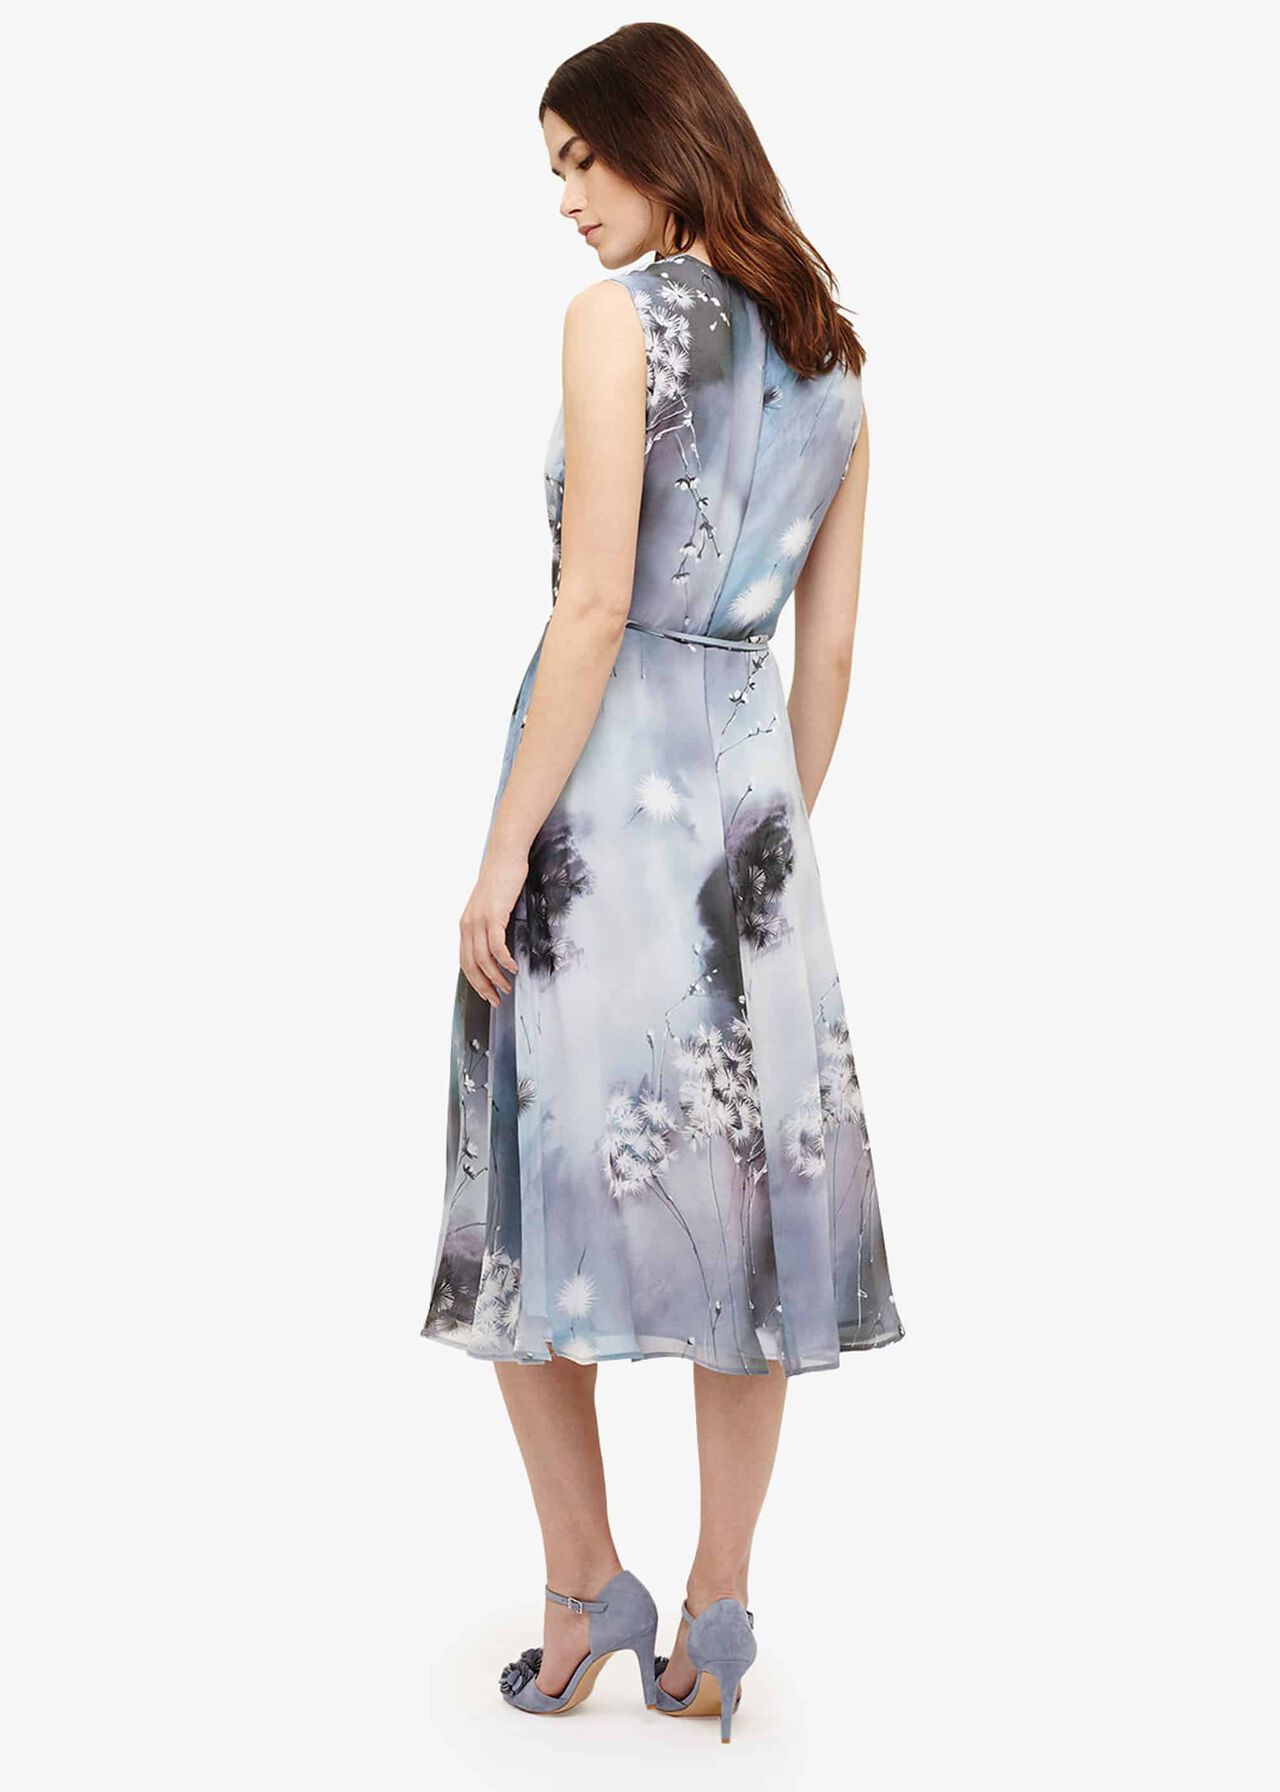 Dandilion Print Dress